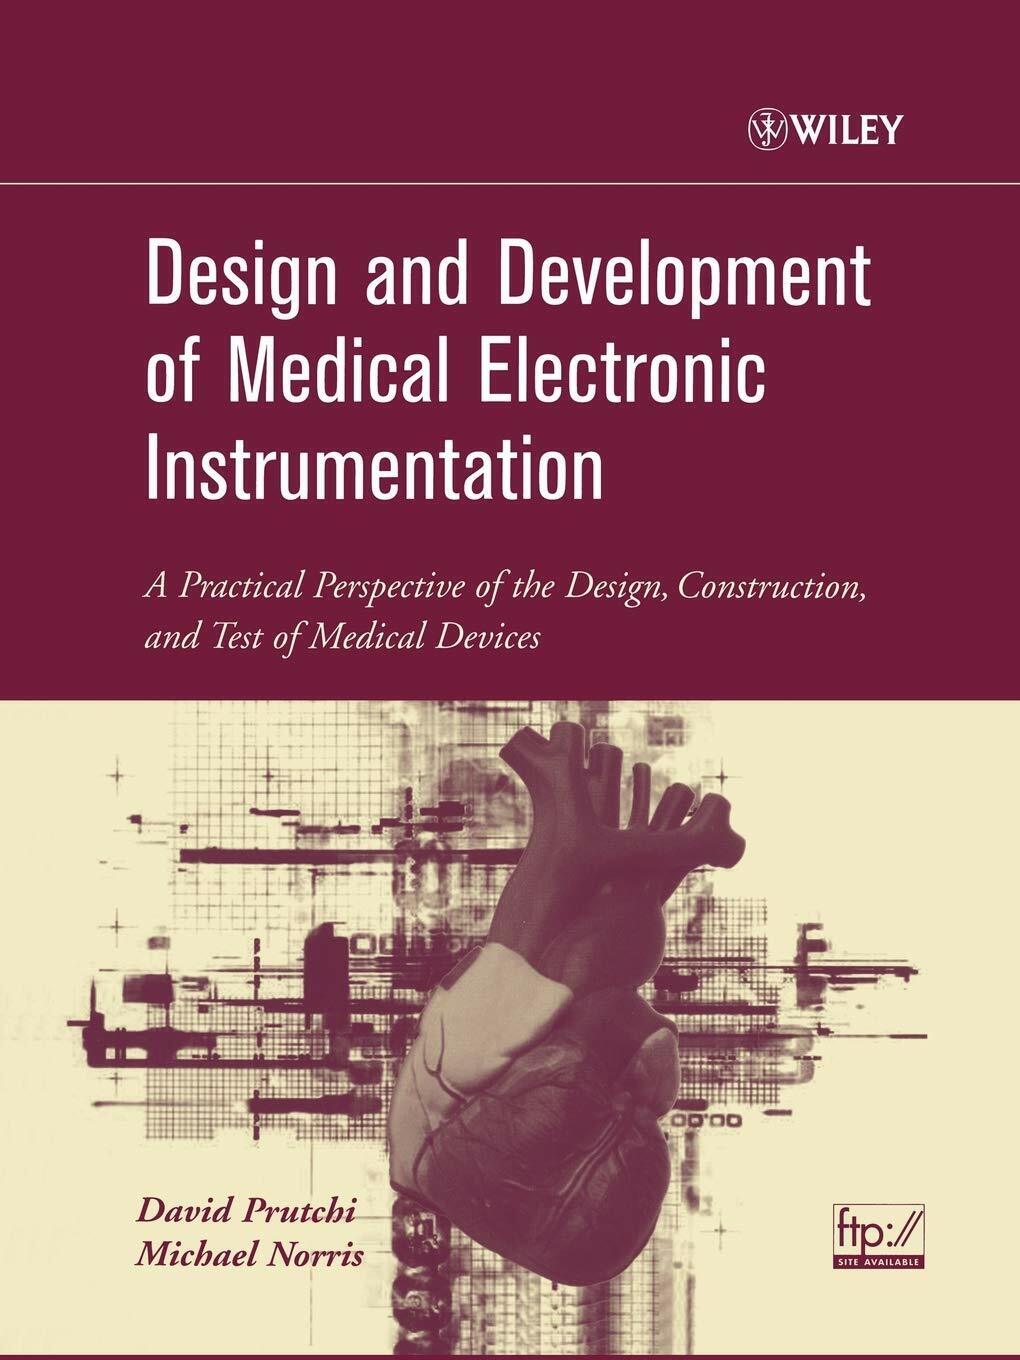 Medical Electronic Instrumentation - Prutchi, Norris - John Wiley & Sons, 2004 libro usato